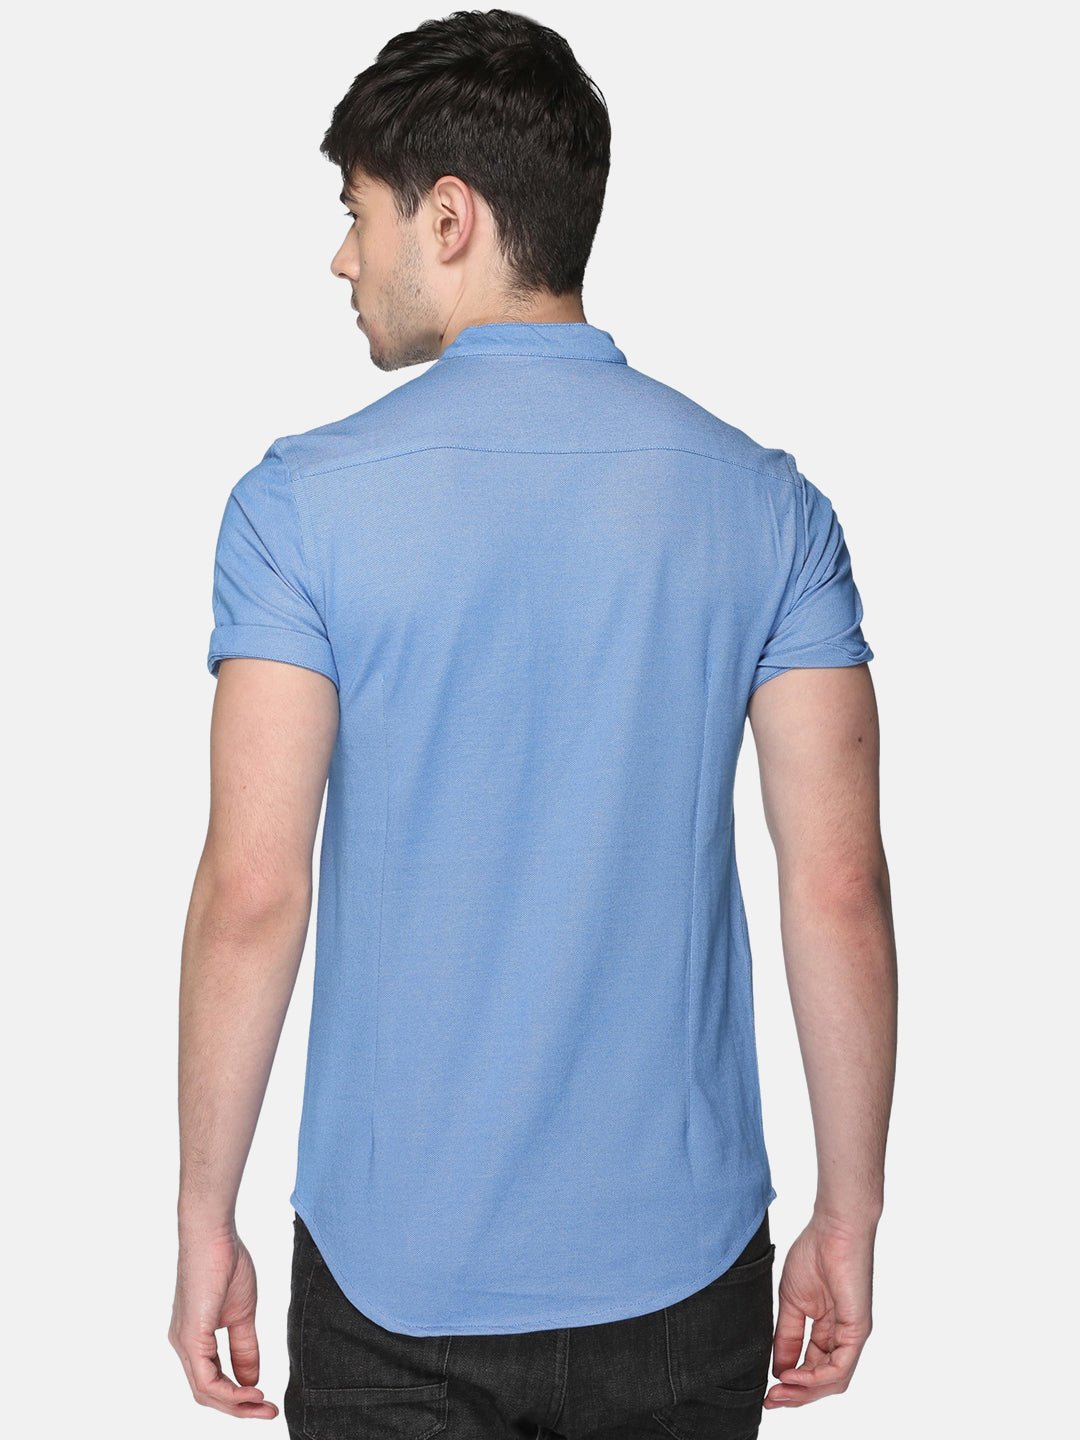 Blue Knitted Shirt - clubyork